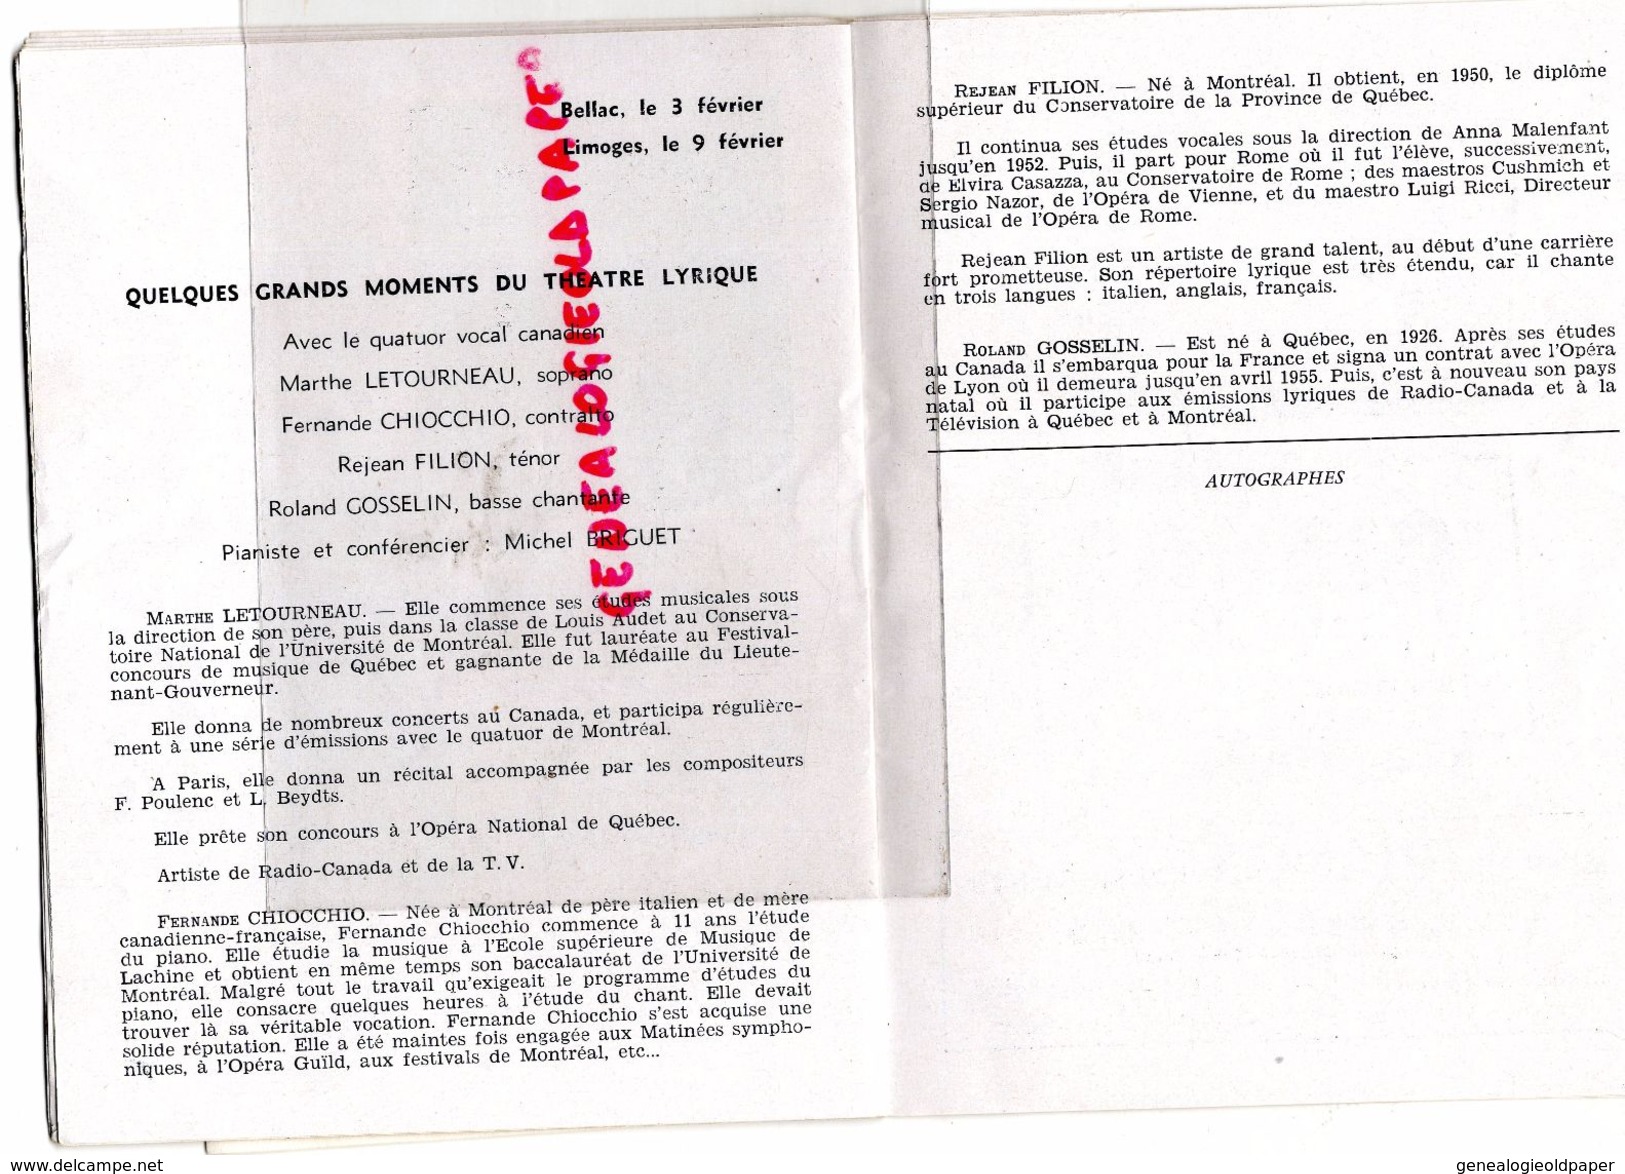 87 - LIMOGES- PROGRAMME JEUNESSES MUSICALES FRANCE-BELLAC-RENE NICOLY-1957-1958-SEVILLA-CIROULNIK-HISTOIRE DU SOLDAT-